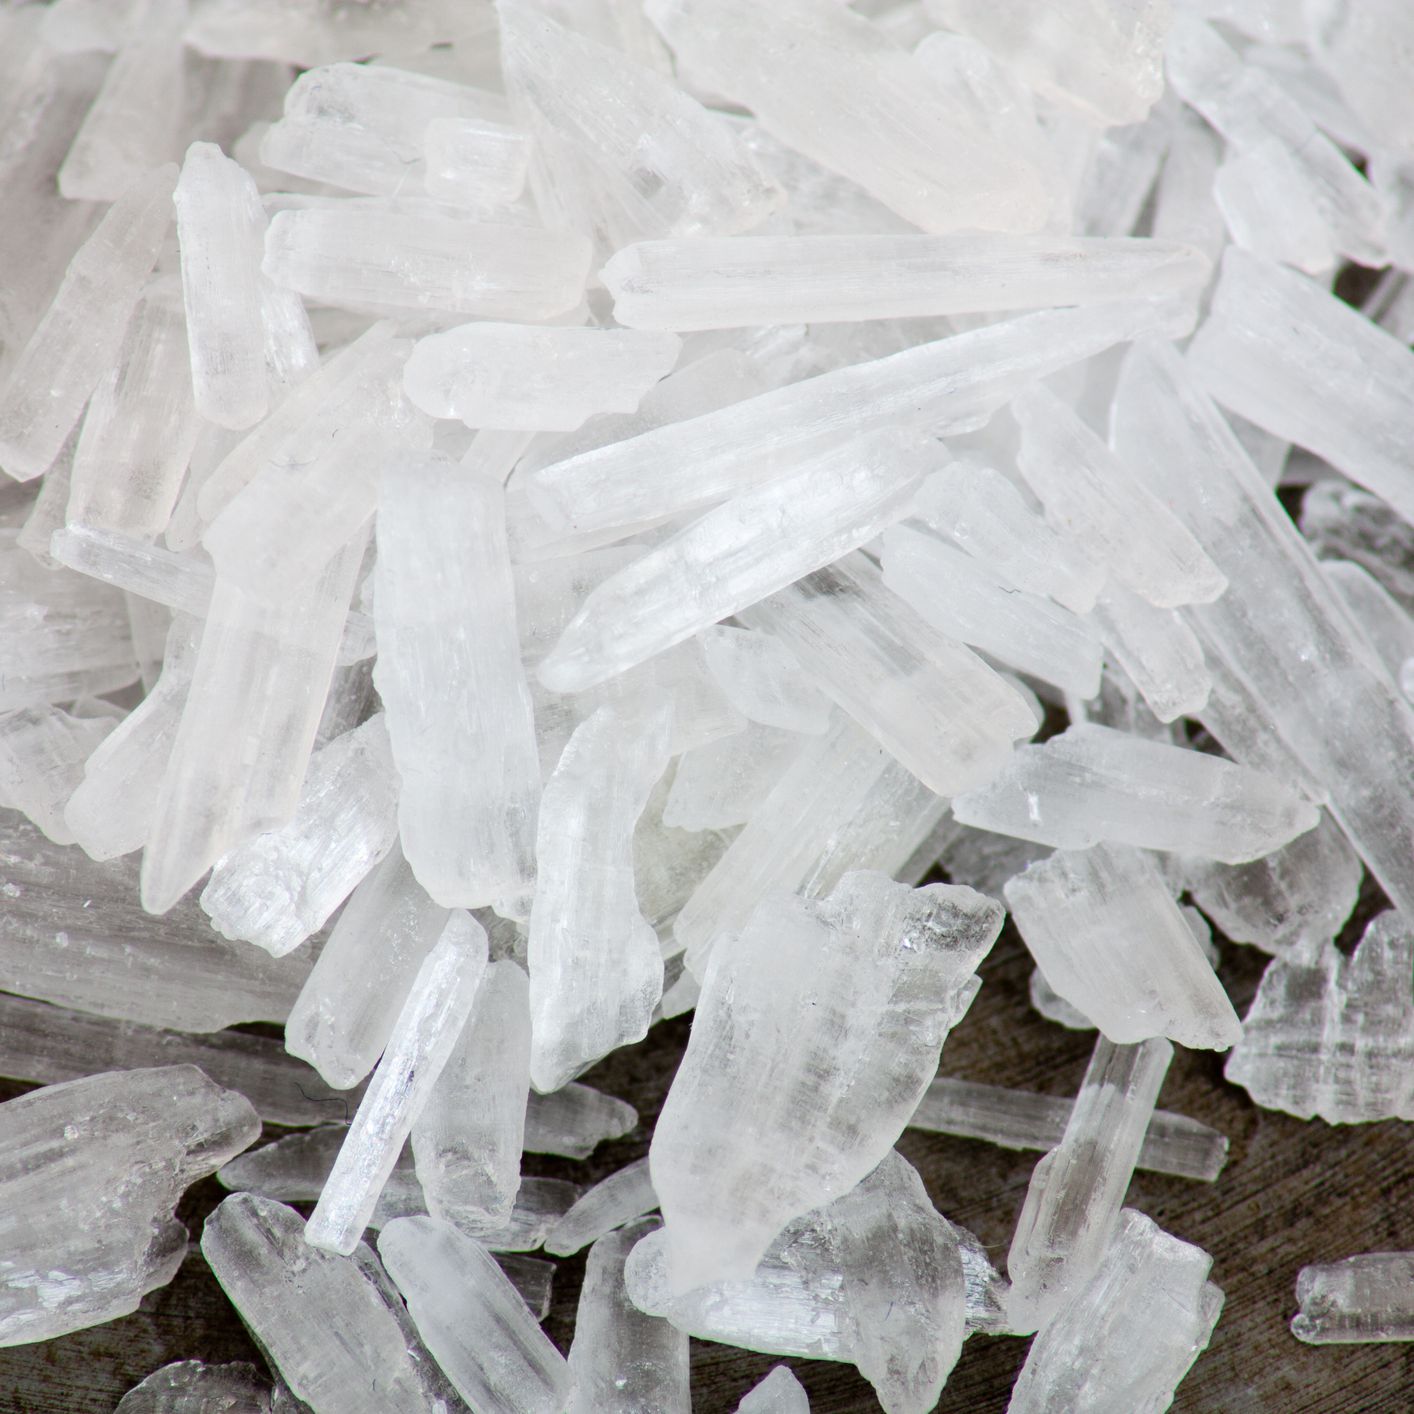 Methamphetamine Powder Crystal Online, Dapatkan Meth Crystal Powder Online